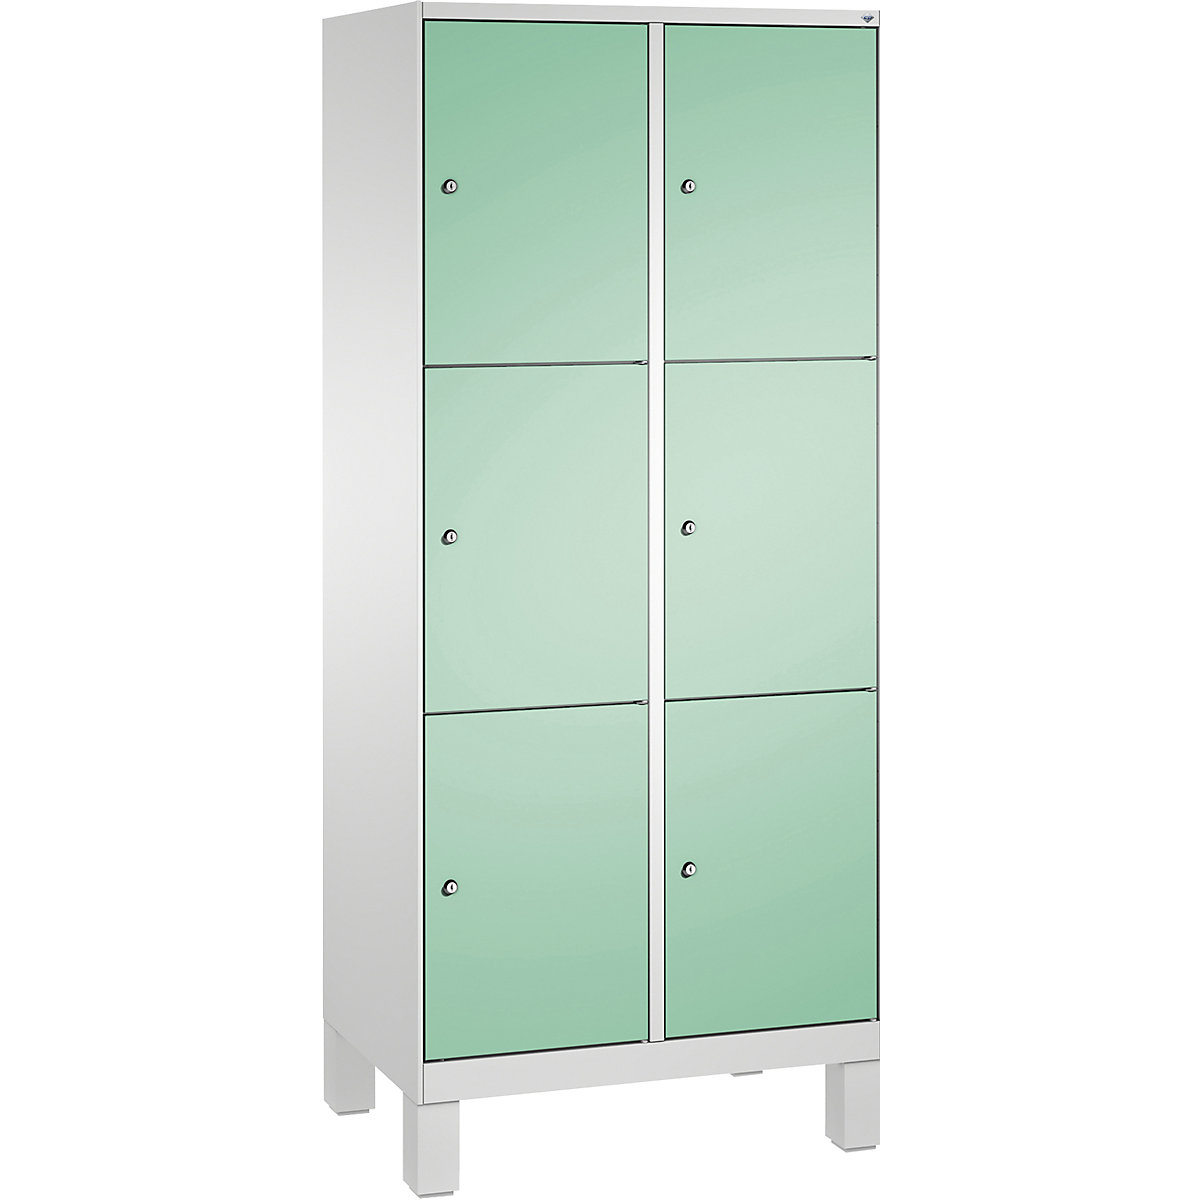 EVOLO locker unit, with feet – C+P, 2 compartments, 3 shelf compartments each, compartment width 400 mm, light grey / light green